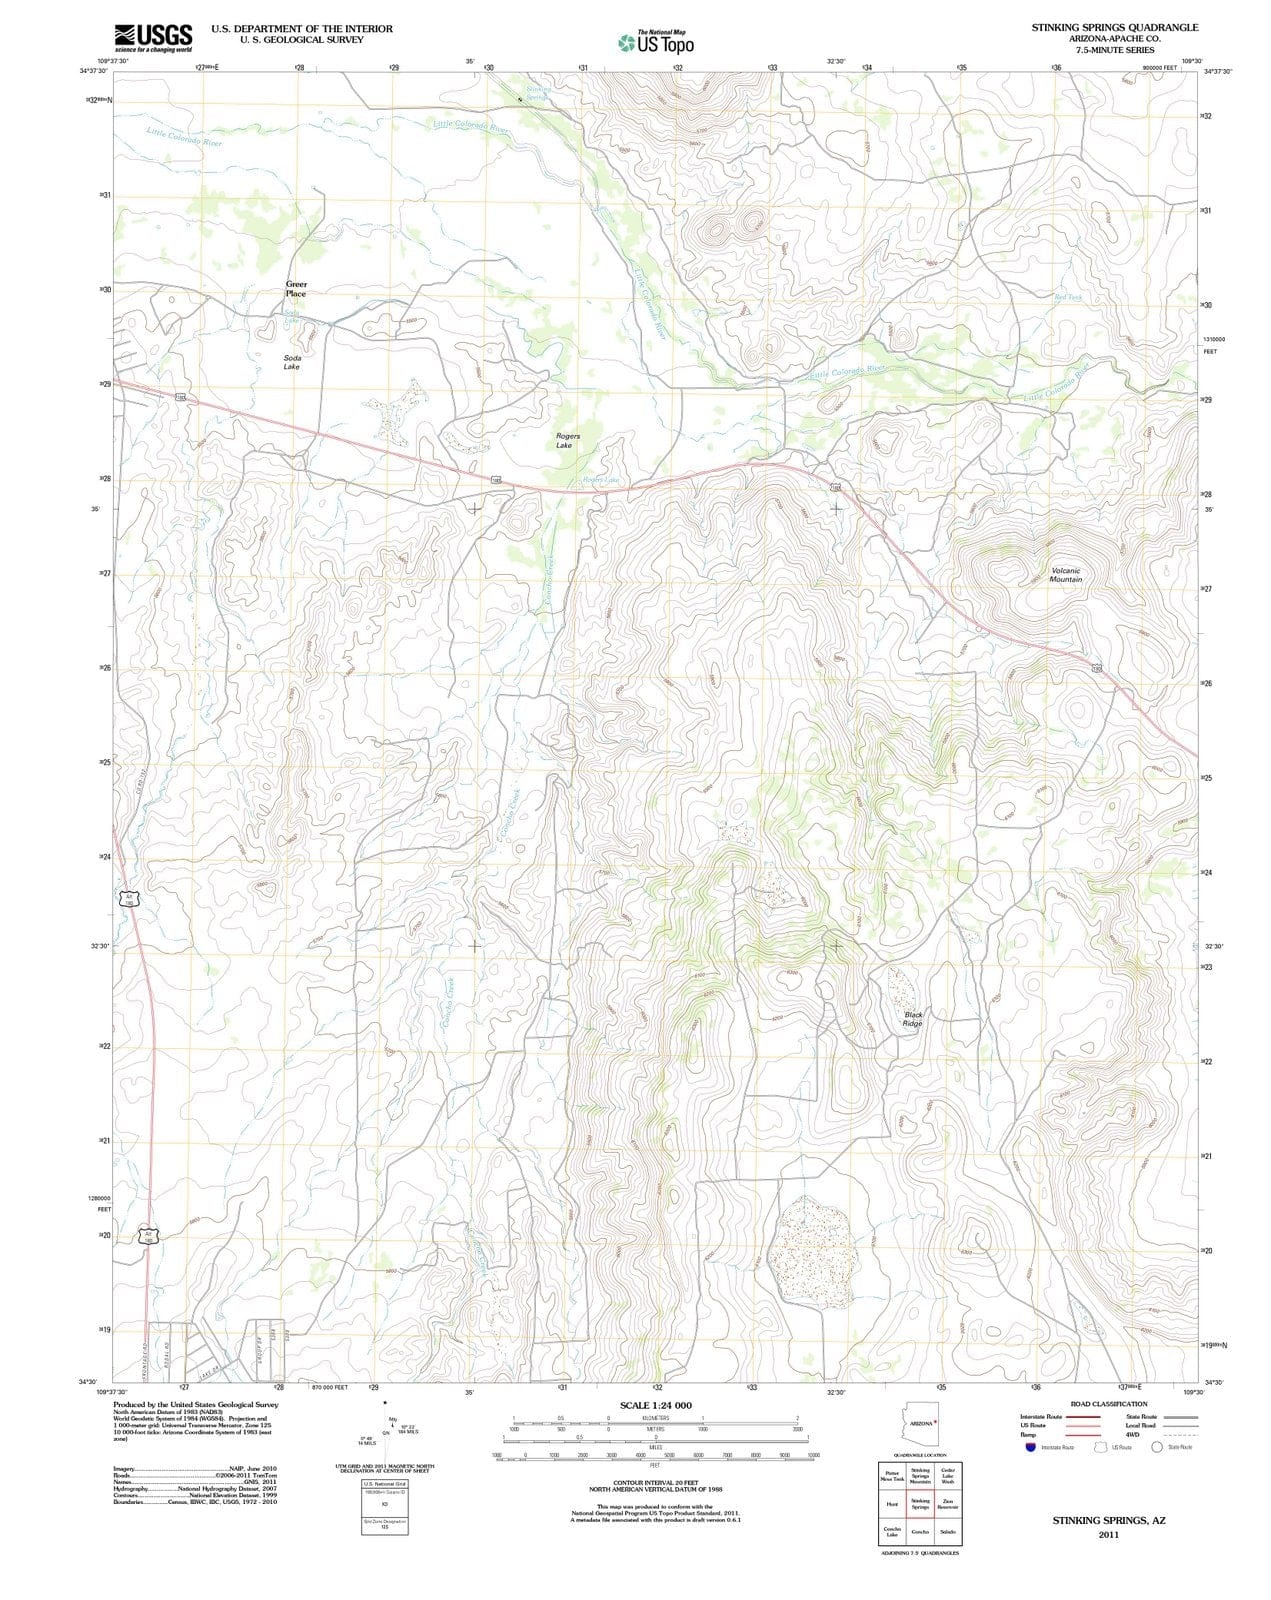 2011 Stinking Springs, AZ - Arizona - USGS Topographic Map